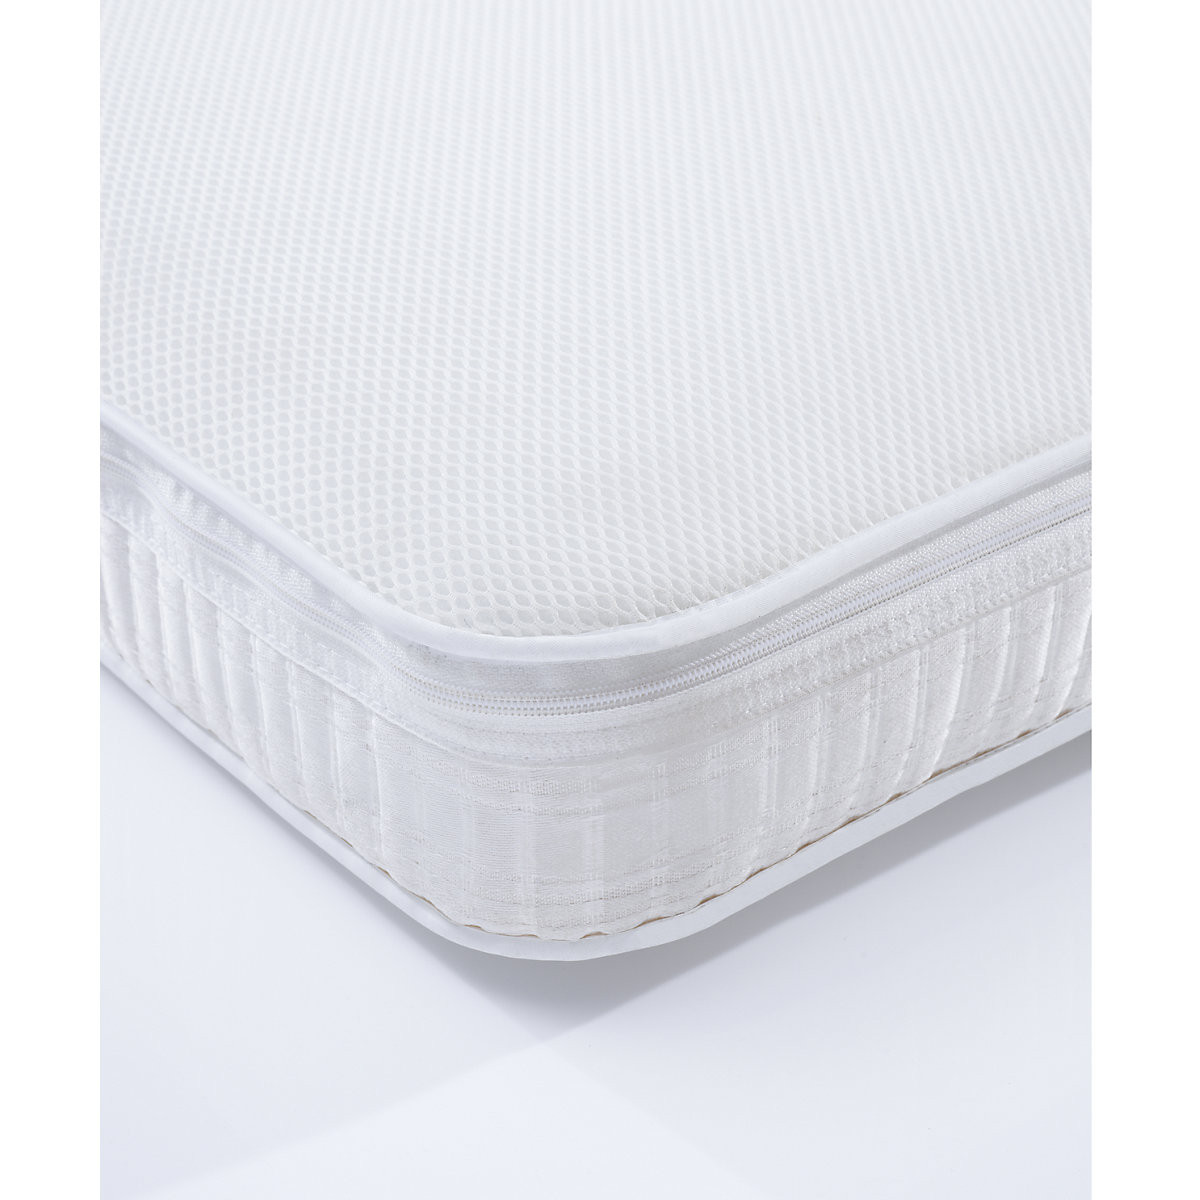 pocket spring cot bed mattress